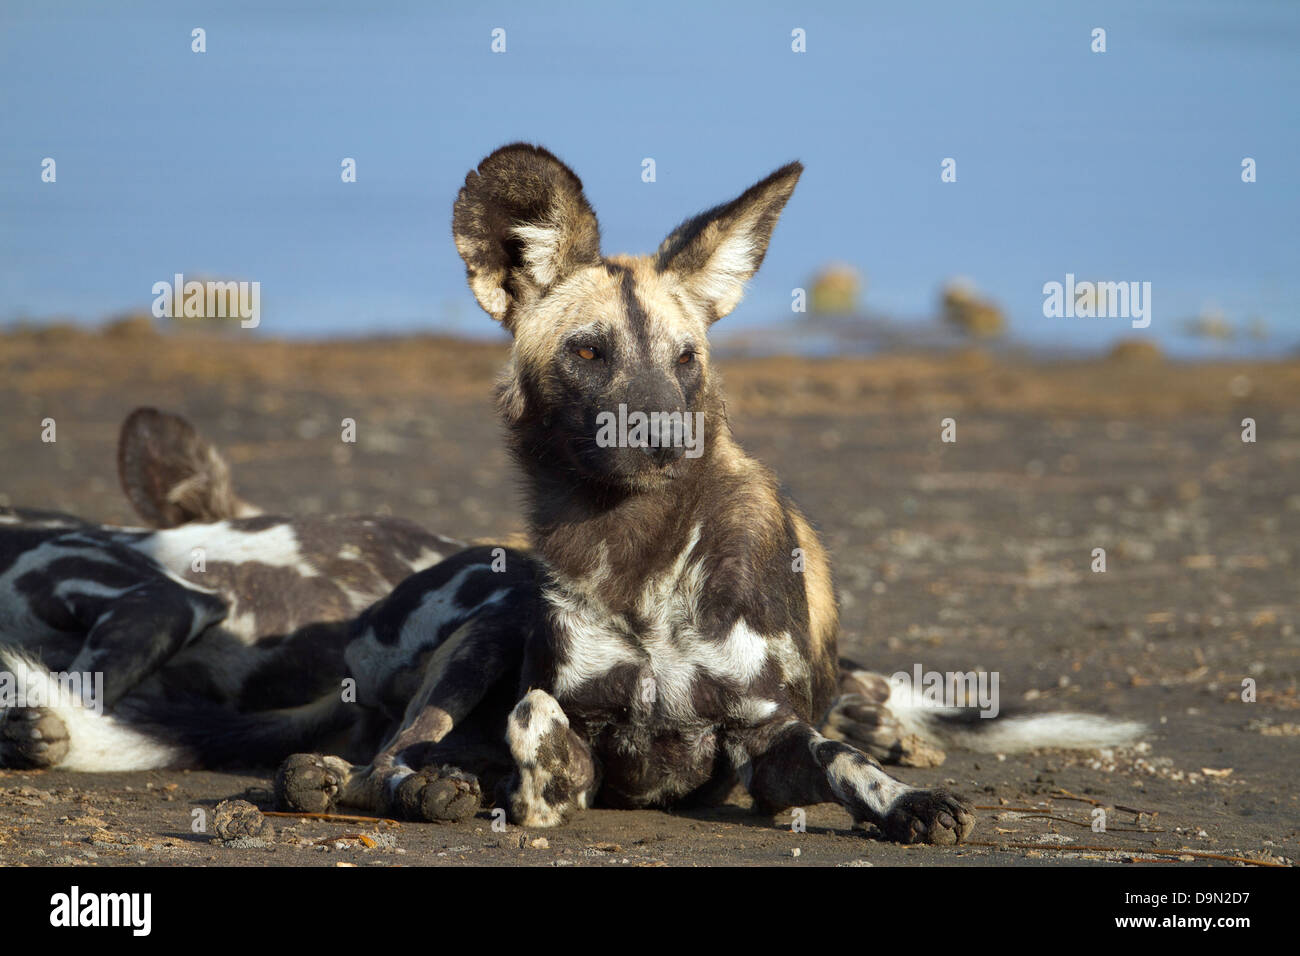 African wild dog close up portrait, Serengeti, Tanzania Stock Photo